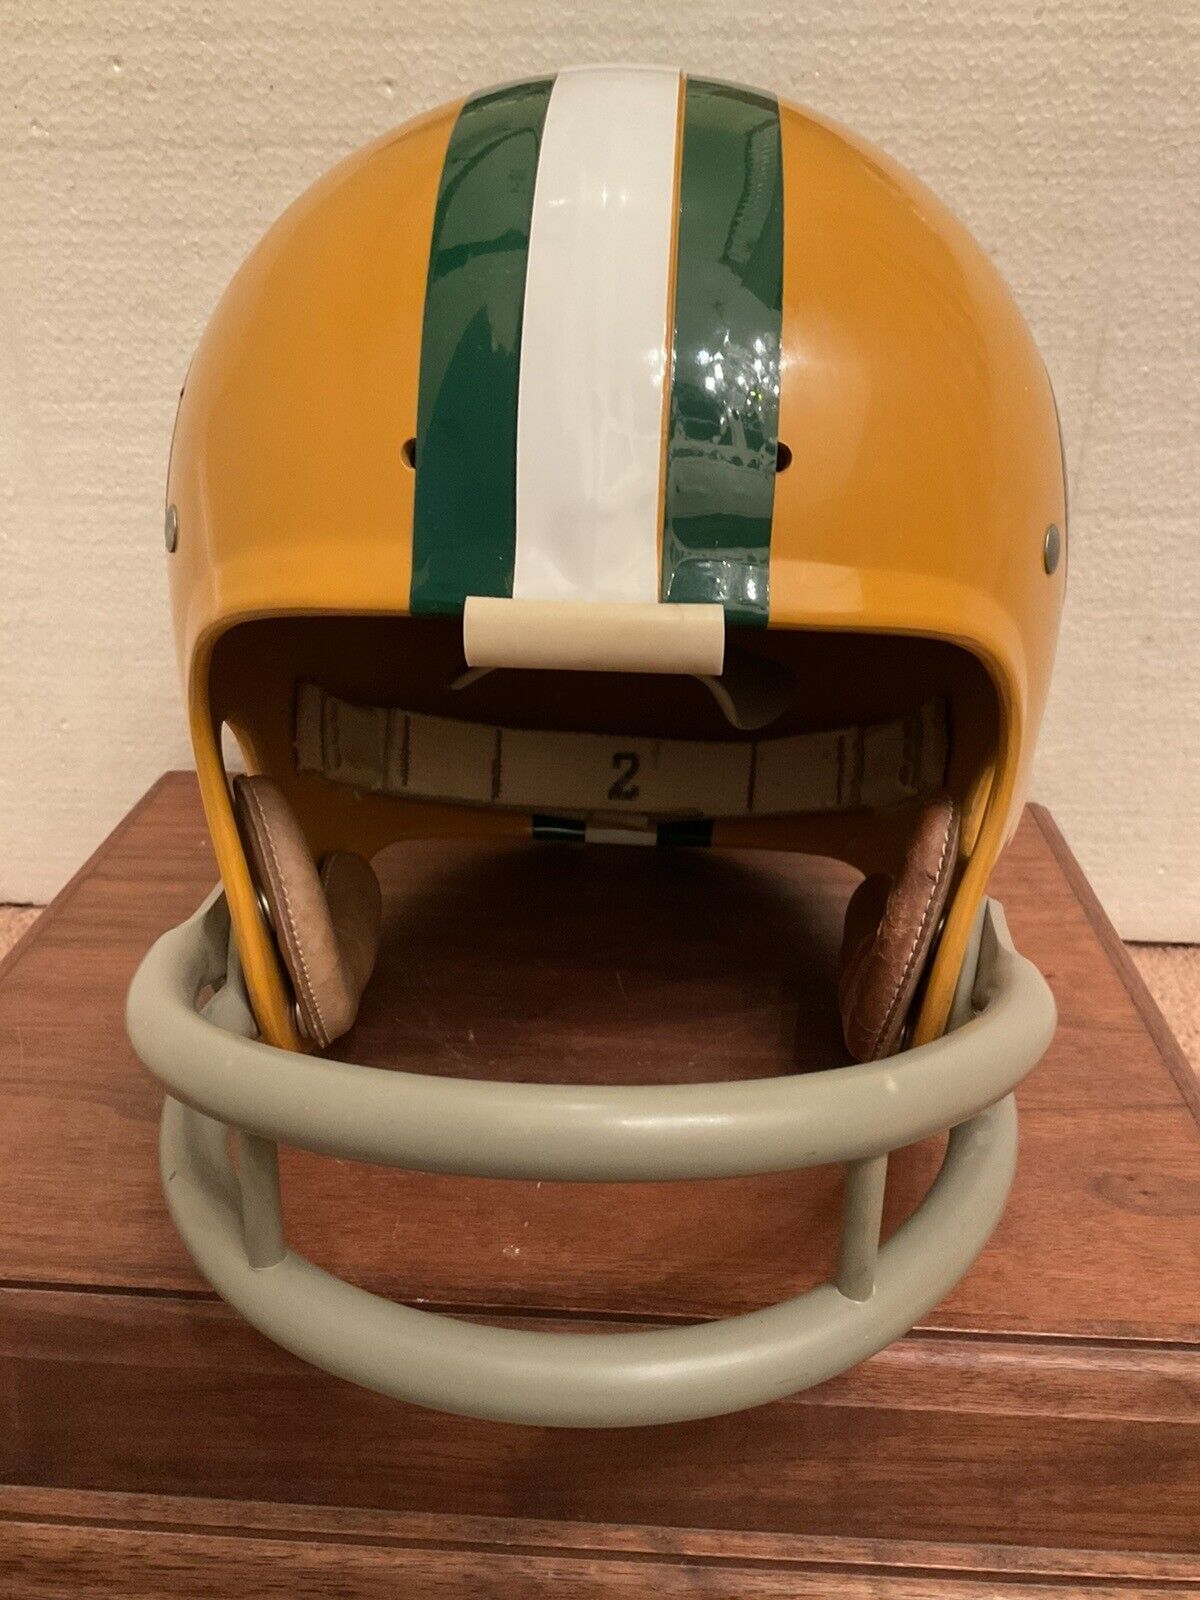 Vintage Riddell Kra-Lite II Football Helmet 1972 Green Bay Packers Sports Mem, Cards & Fan Shop:Fan Apparel & Souvenirs:Football-NFL Riddell   